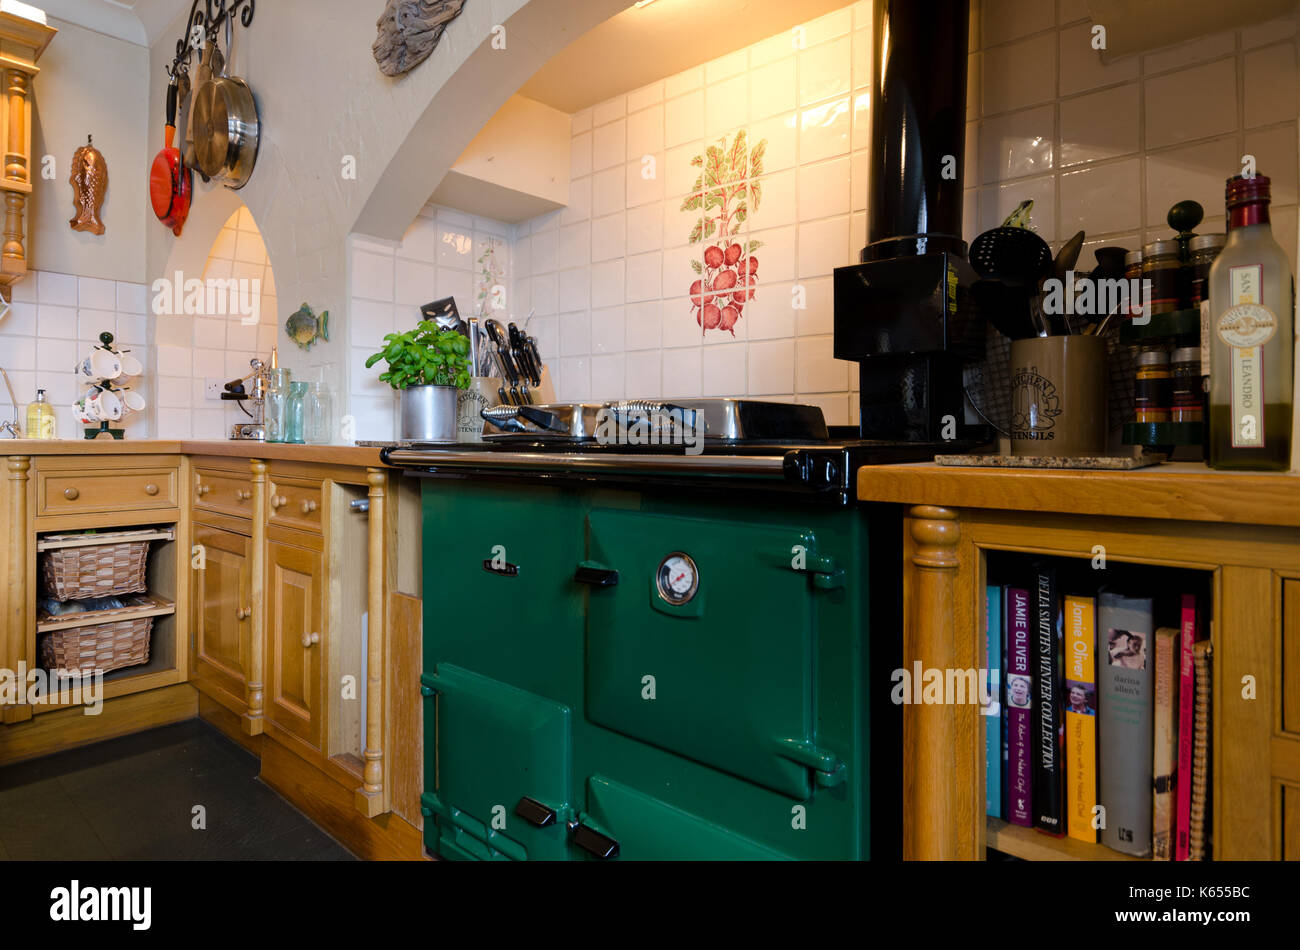 Green Aga type range cooker in kitchen Stock Photo